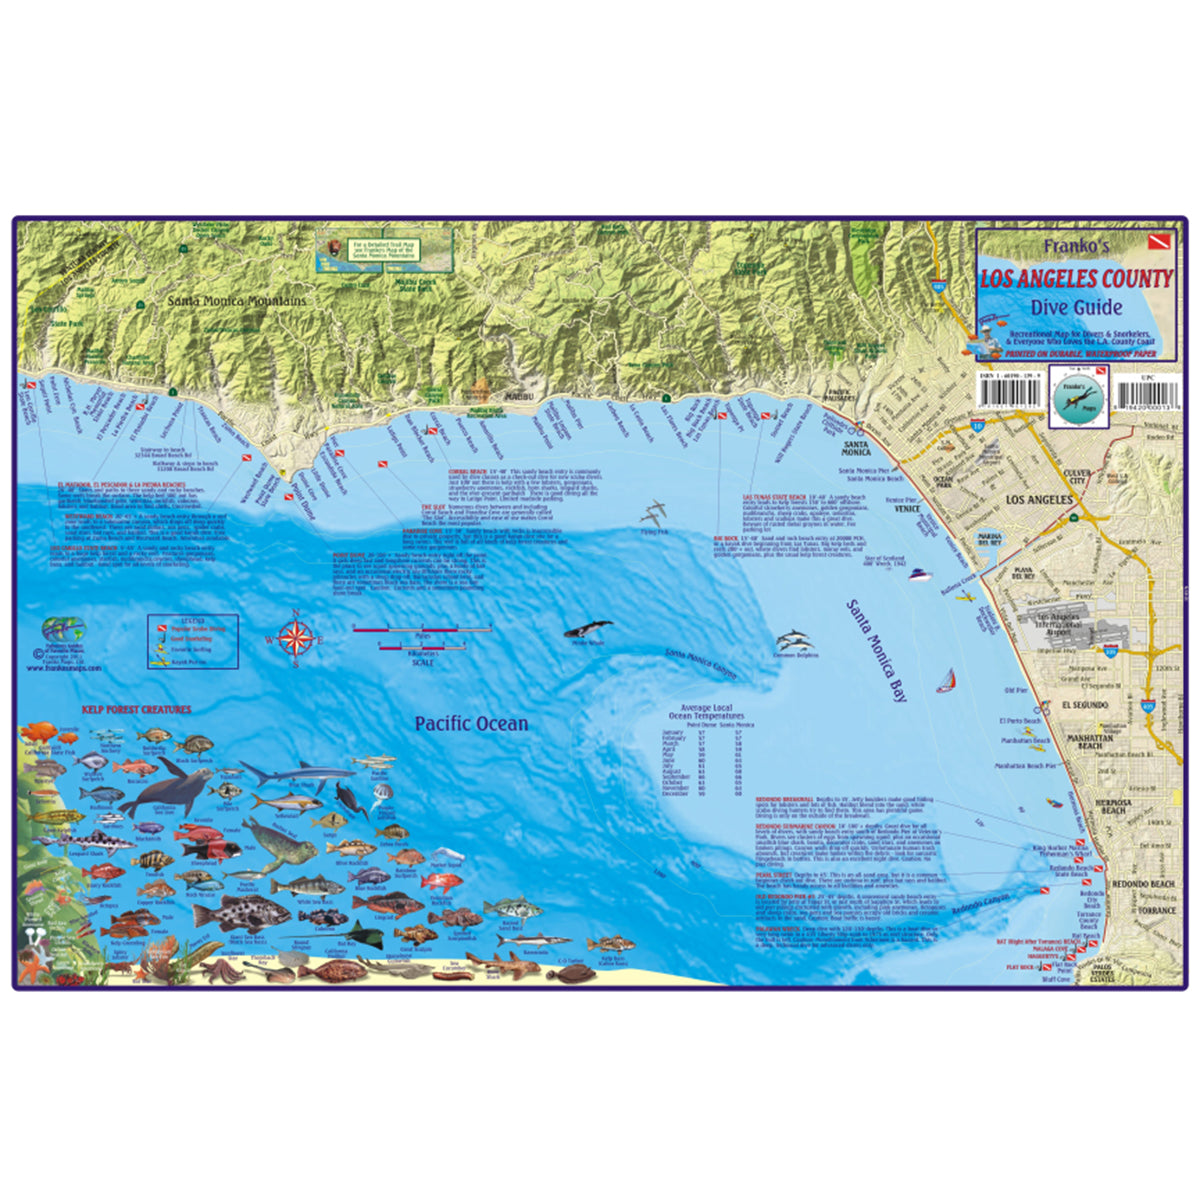 Franko Coast – X Angeles 14 Inch County 21 Guide Dive Los Maps